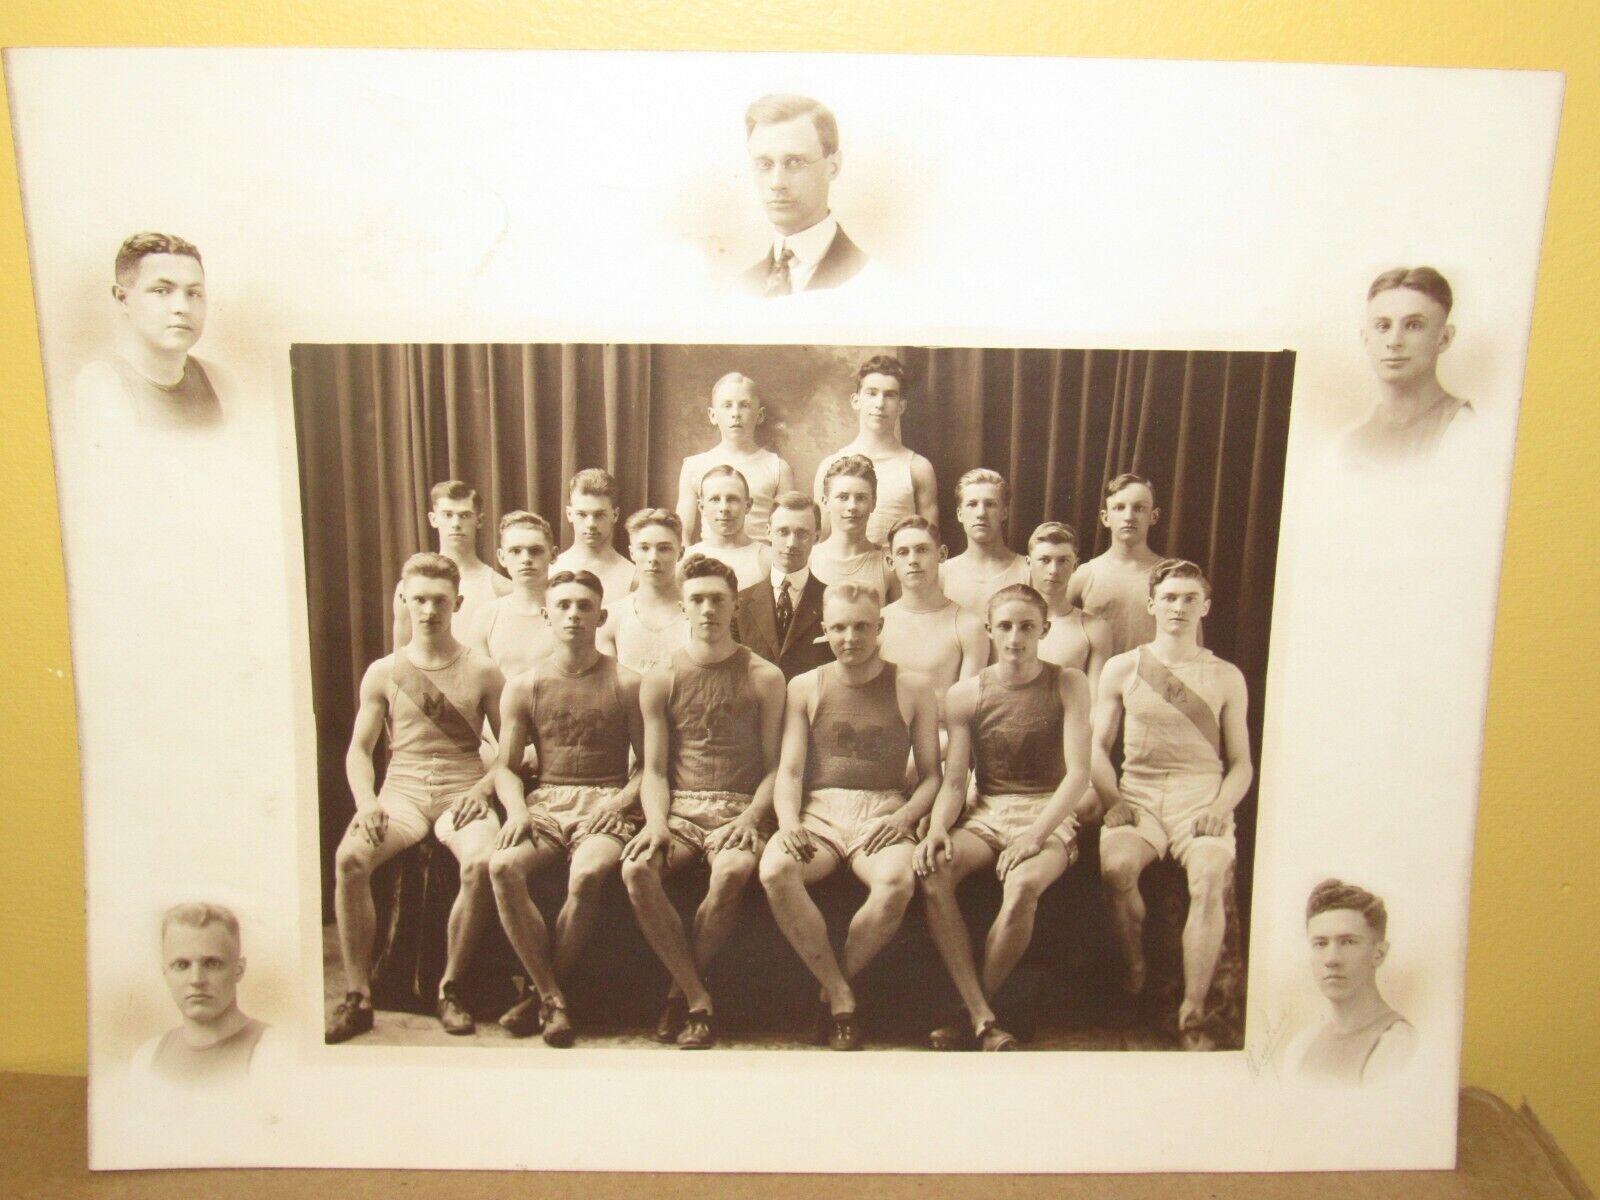 Young Men Manitoba College Sport Team Vintage Photo Frederick V. Bingham, Canada